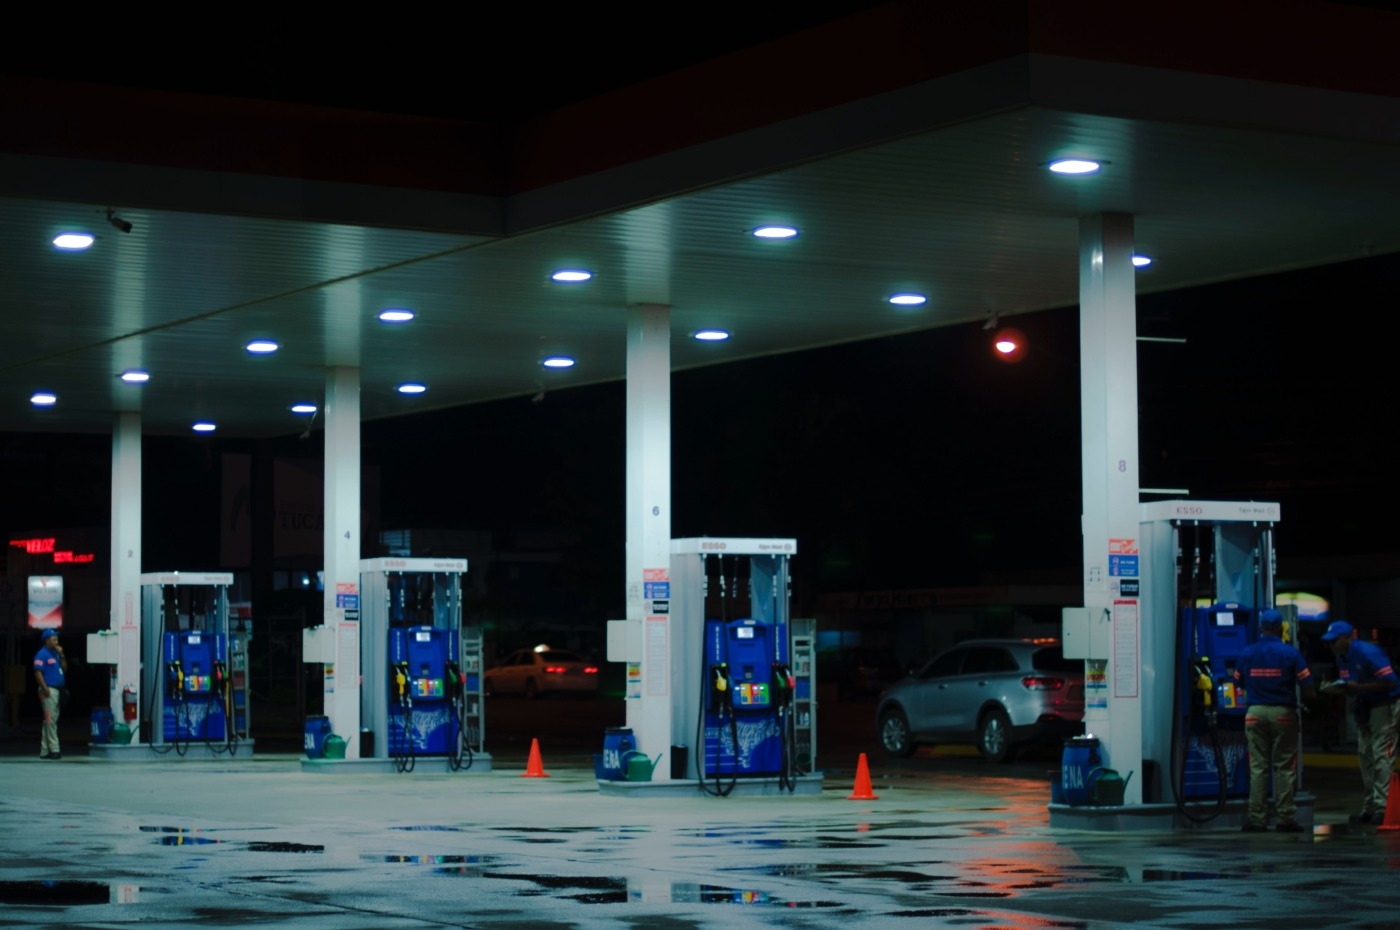 Petrol station / Image: Unsplash